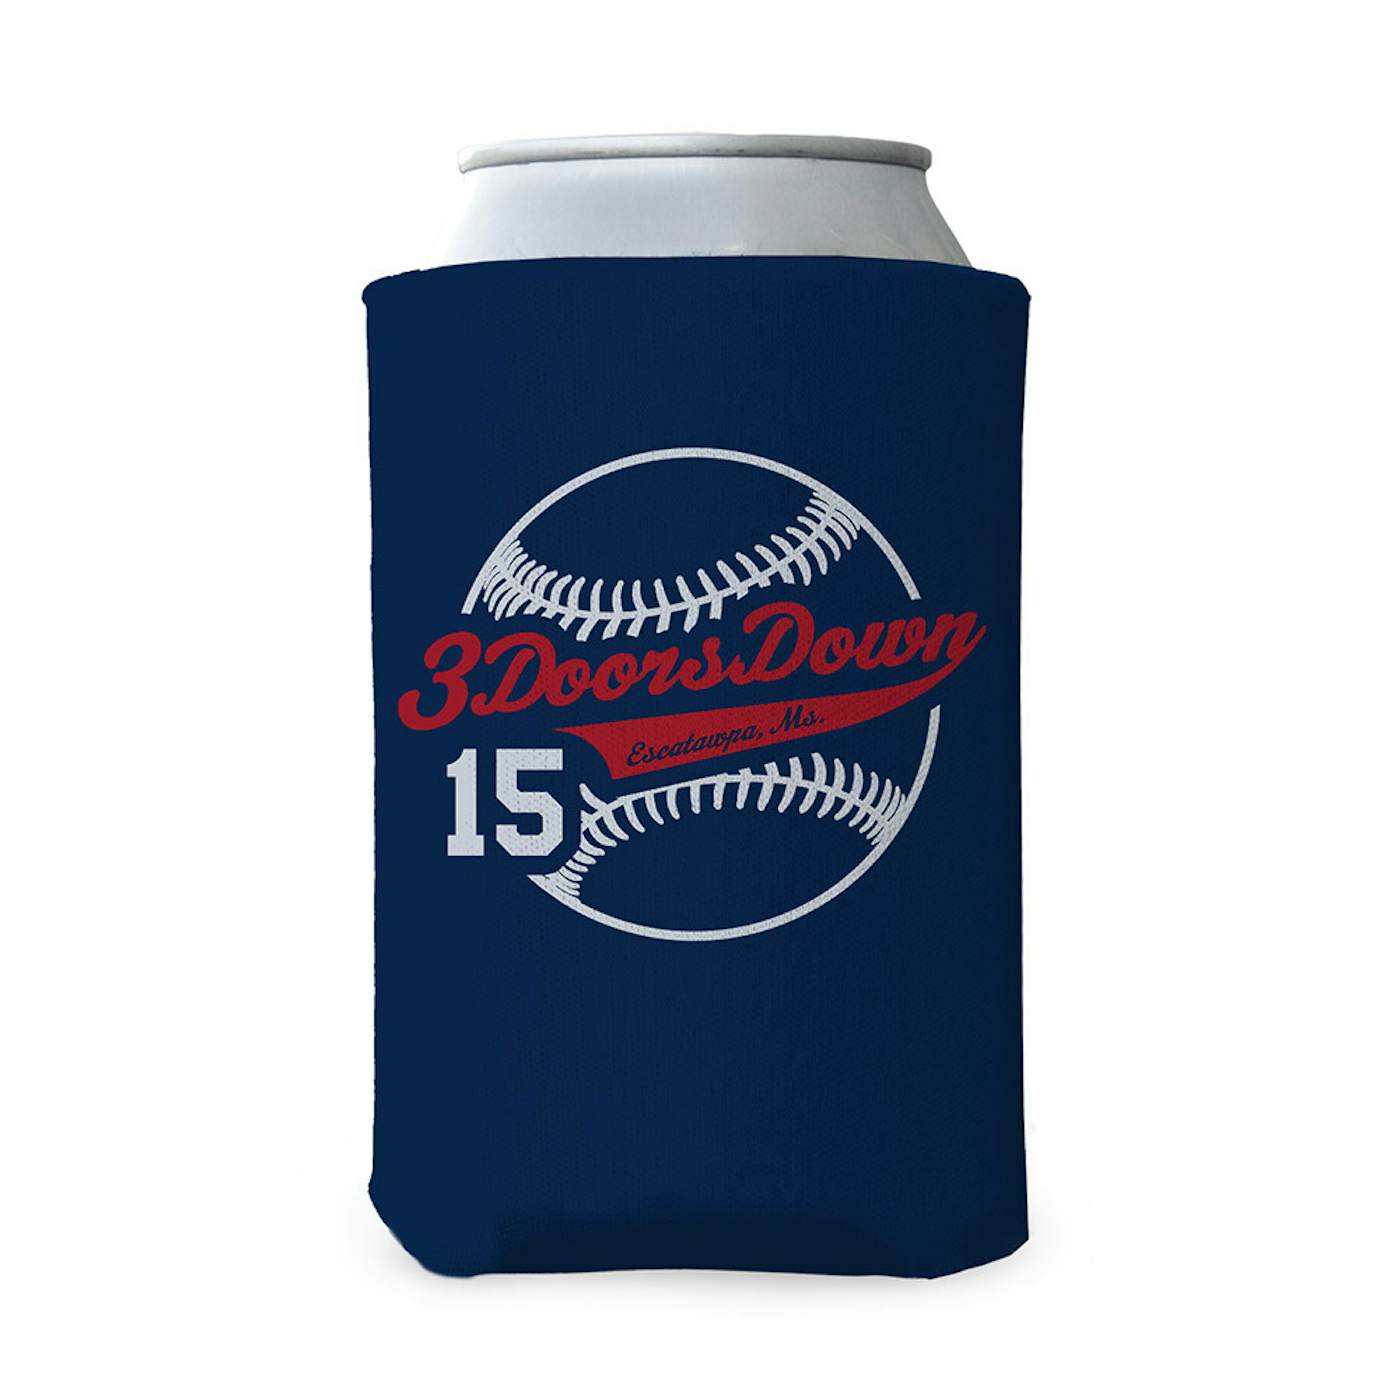 3 Doors Down 2015 Tour Baseball Drink Cooler